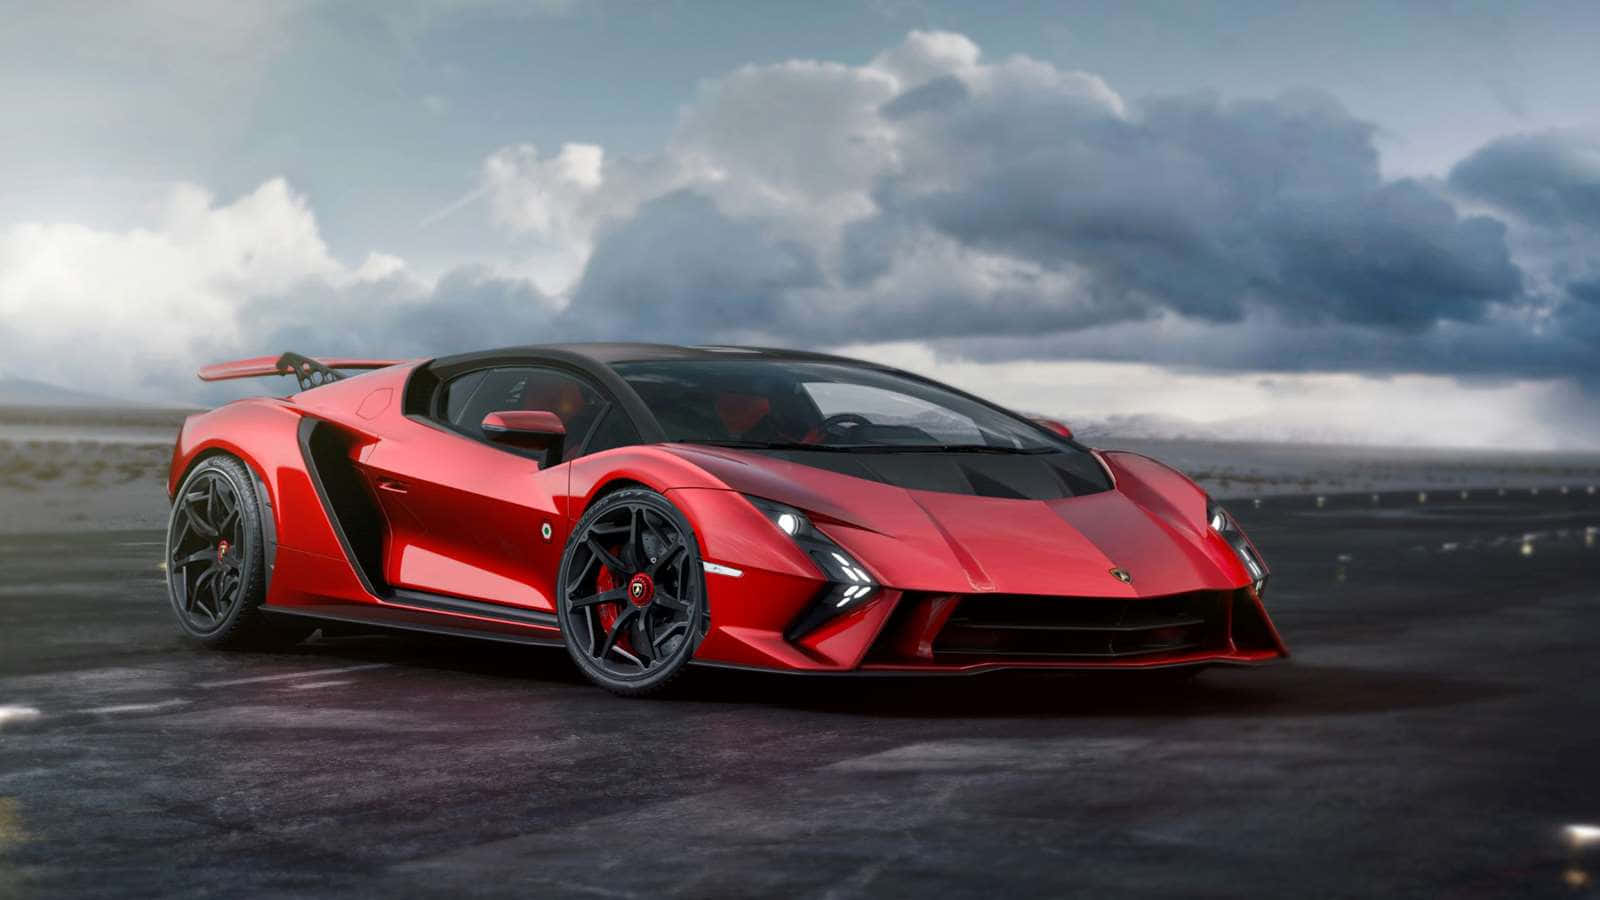 Red Lamborghini on Sleek Road